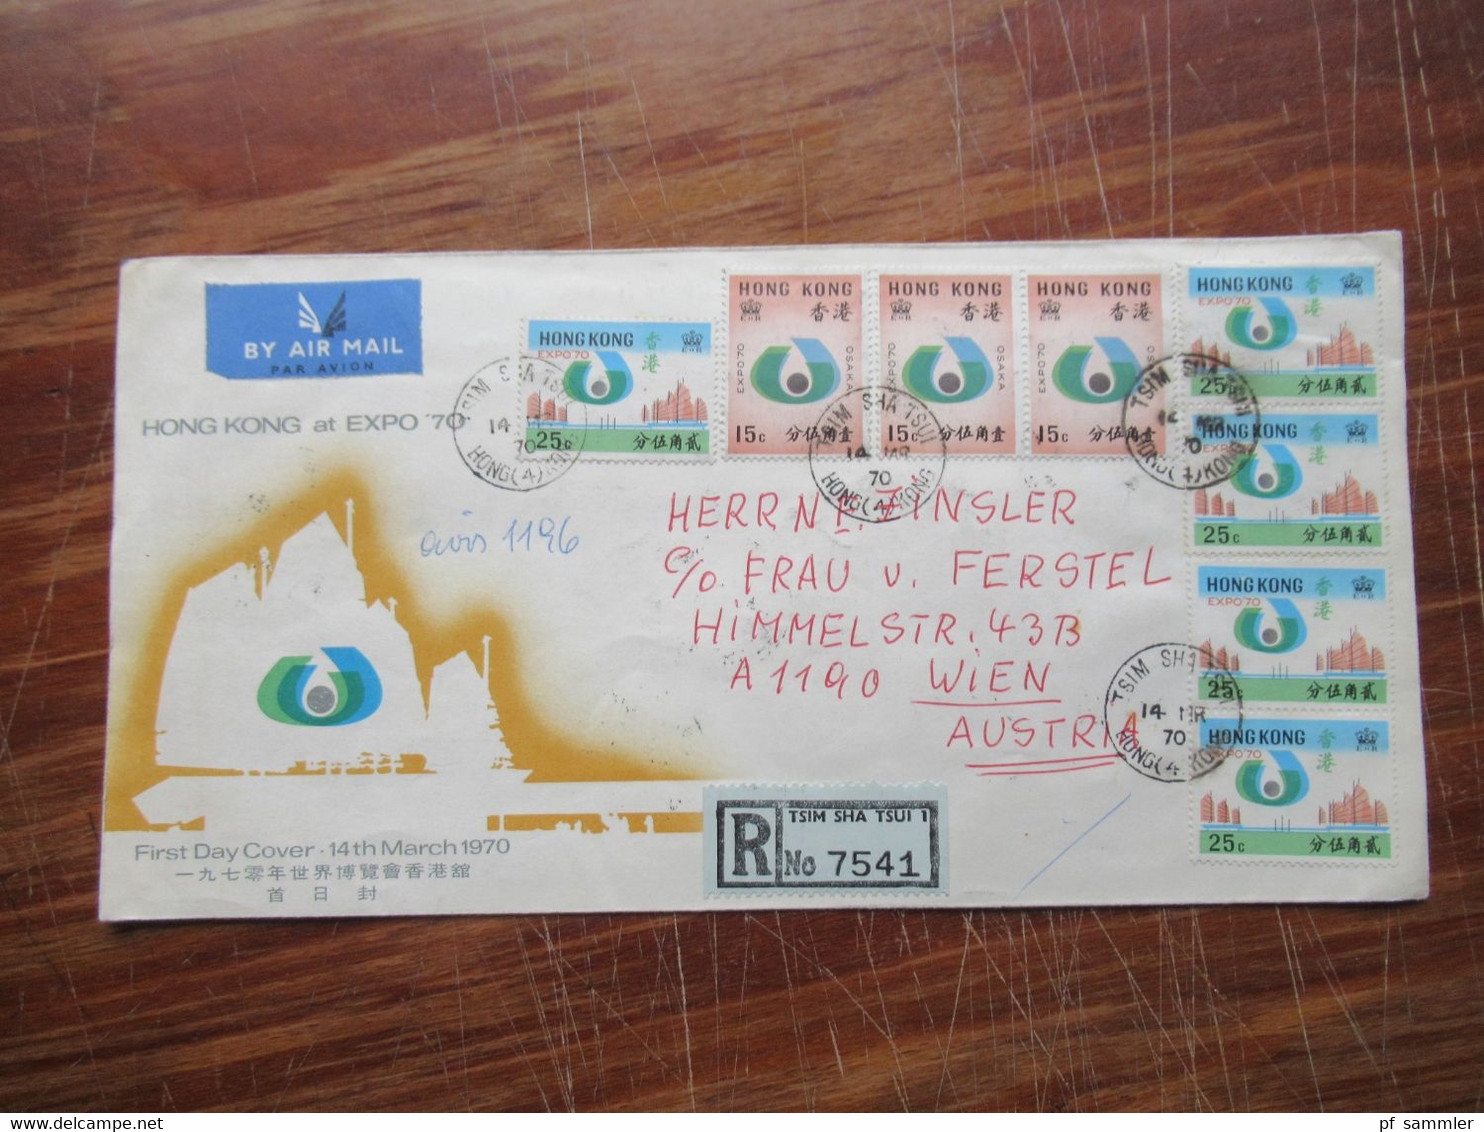 Asien GB Kolonie Hong Kong 1986 3x Belege Registered / Express Mit Hohen Frankaturen! 1x Hong Kong At Expo 1970 - Covers & Documents